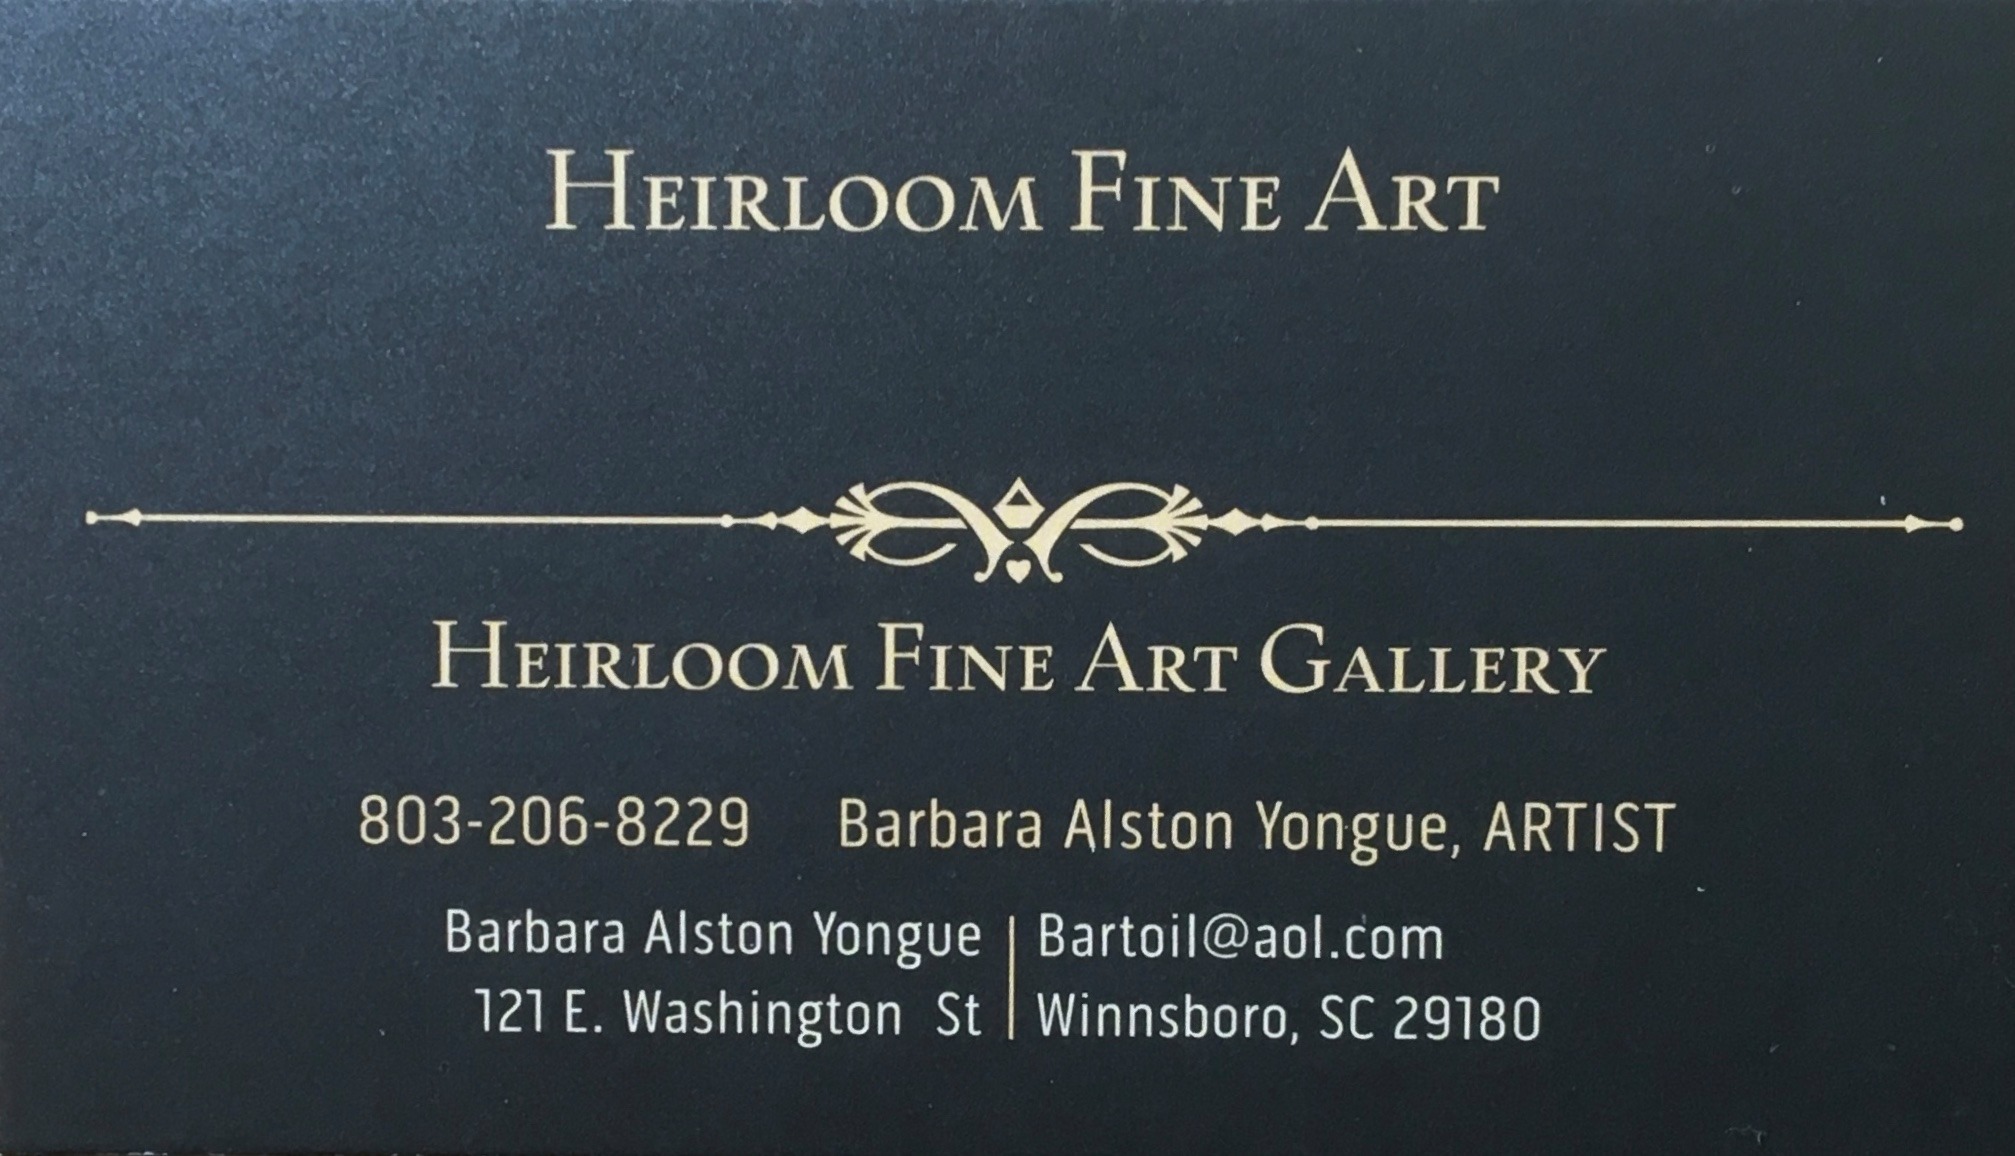 Heirloom Fine Art Gallery